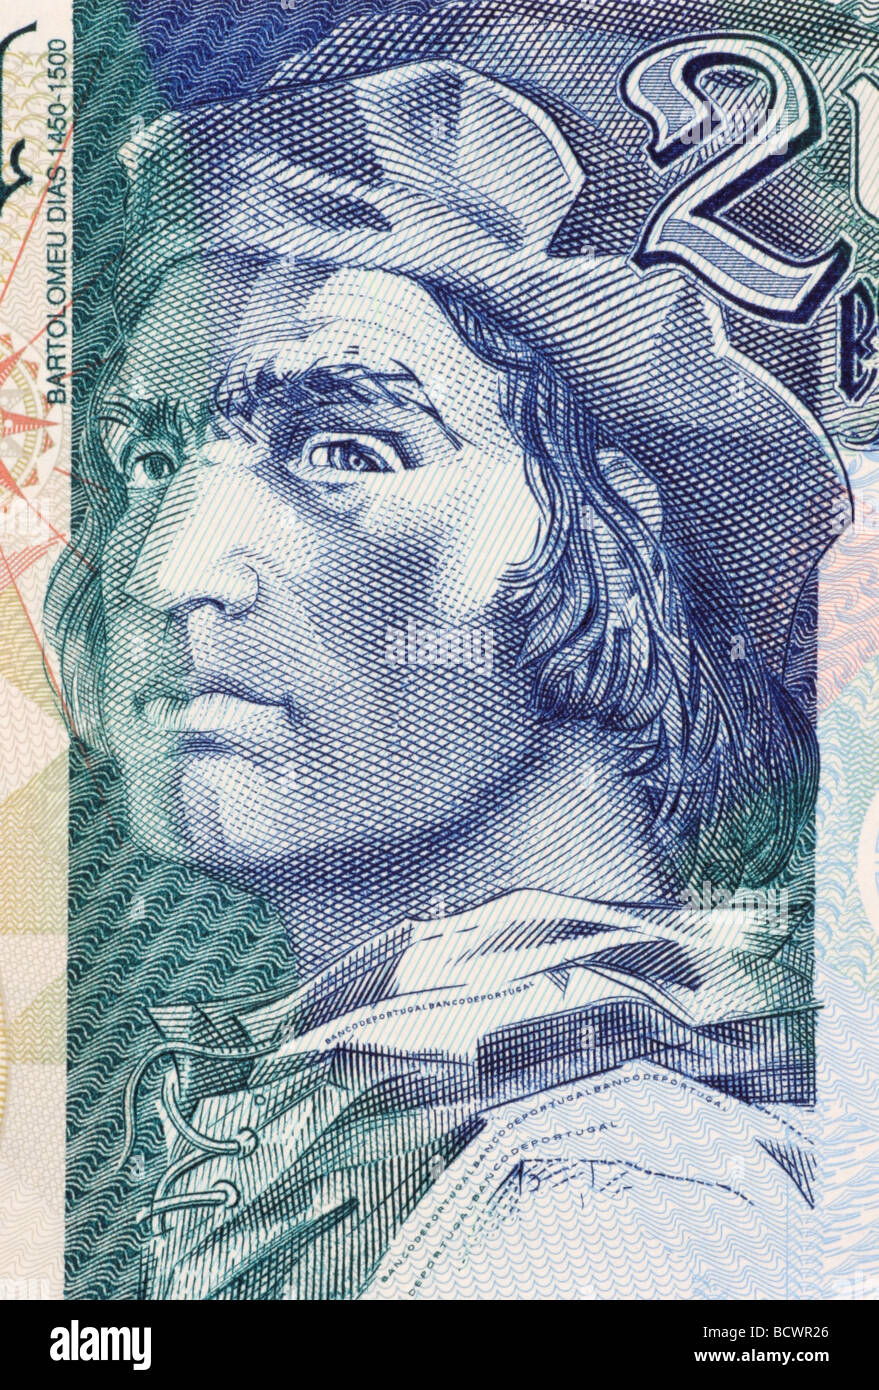 Bartolomeu Dias auf 2000 Escudos 2000 Banknote aus Portugal Stockfoto